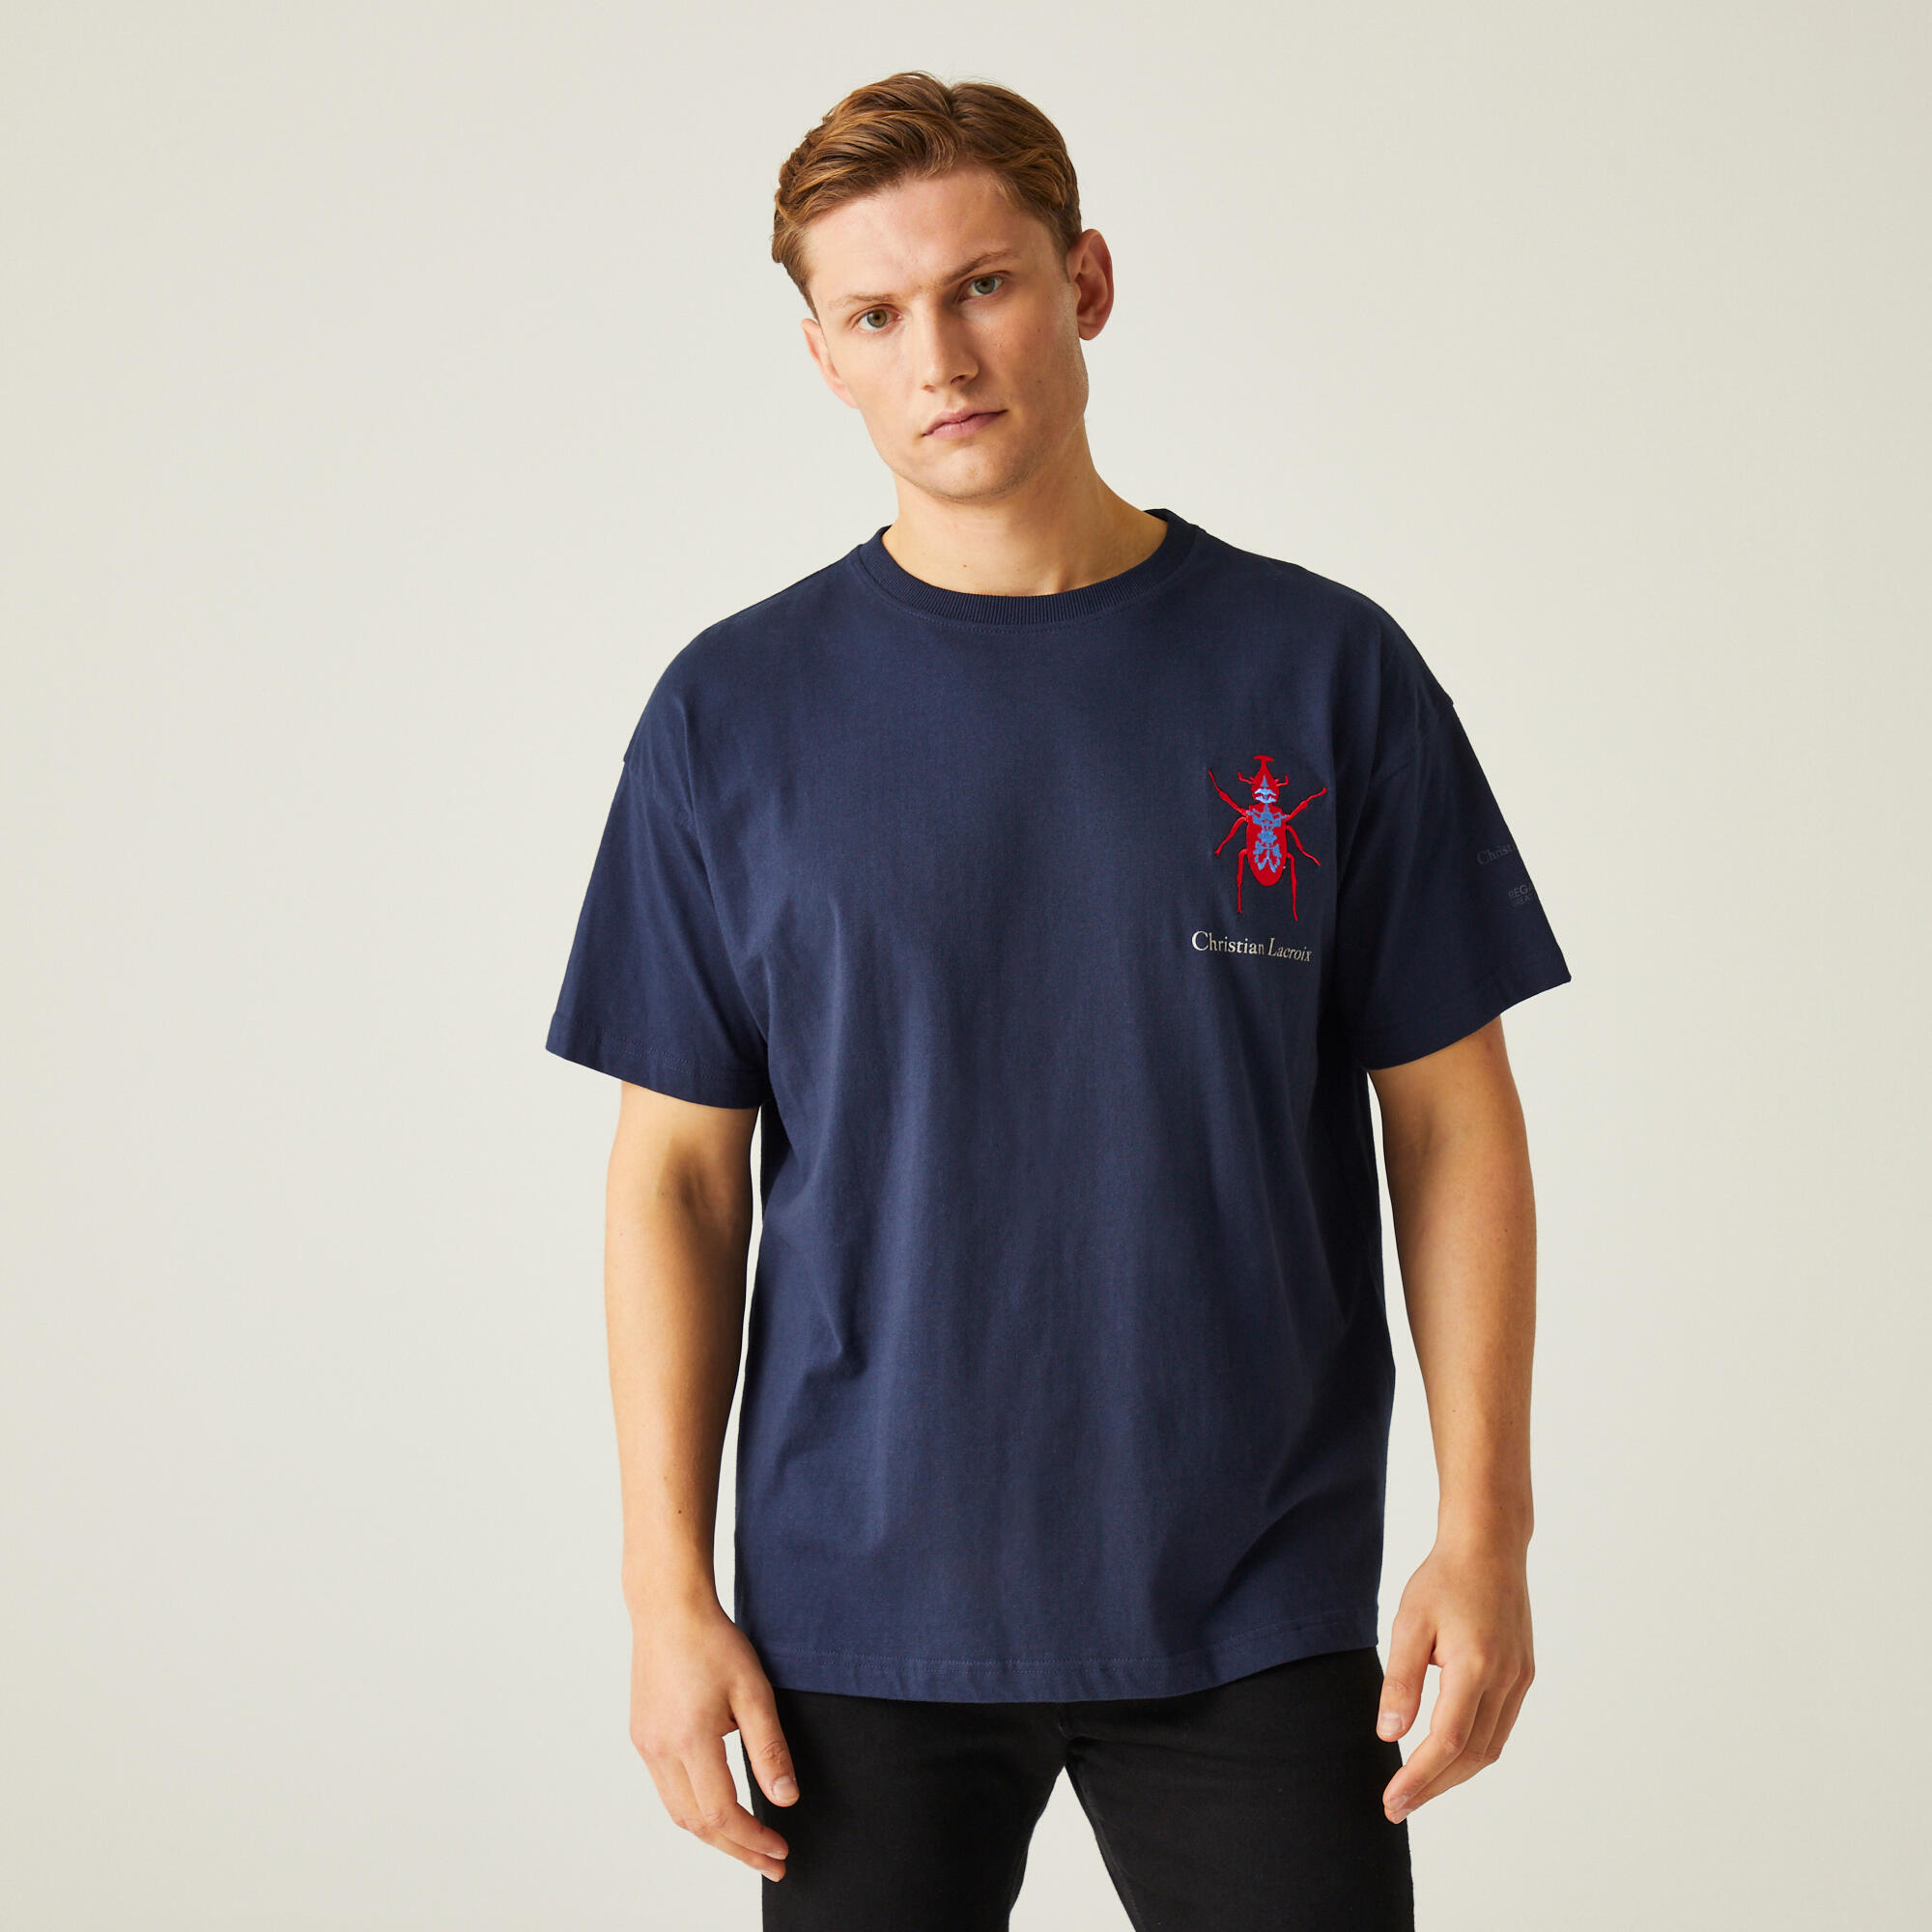 REGATTA CLR - Men's Walking Aramon T-Shirt